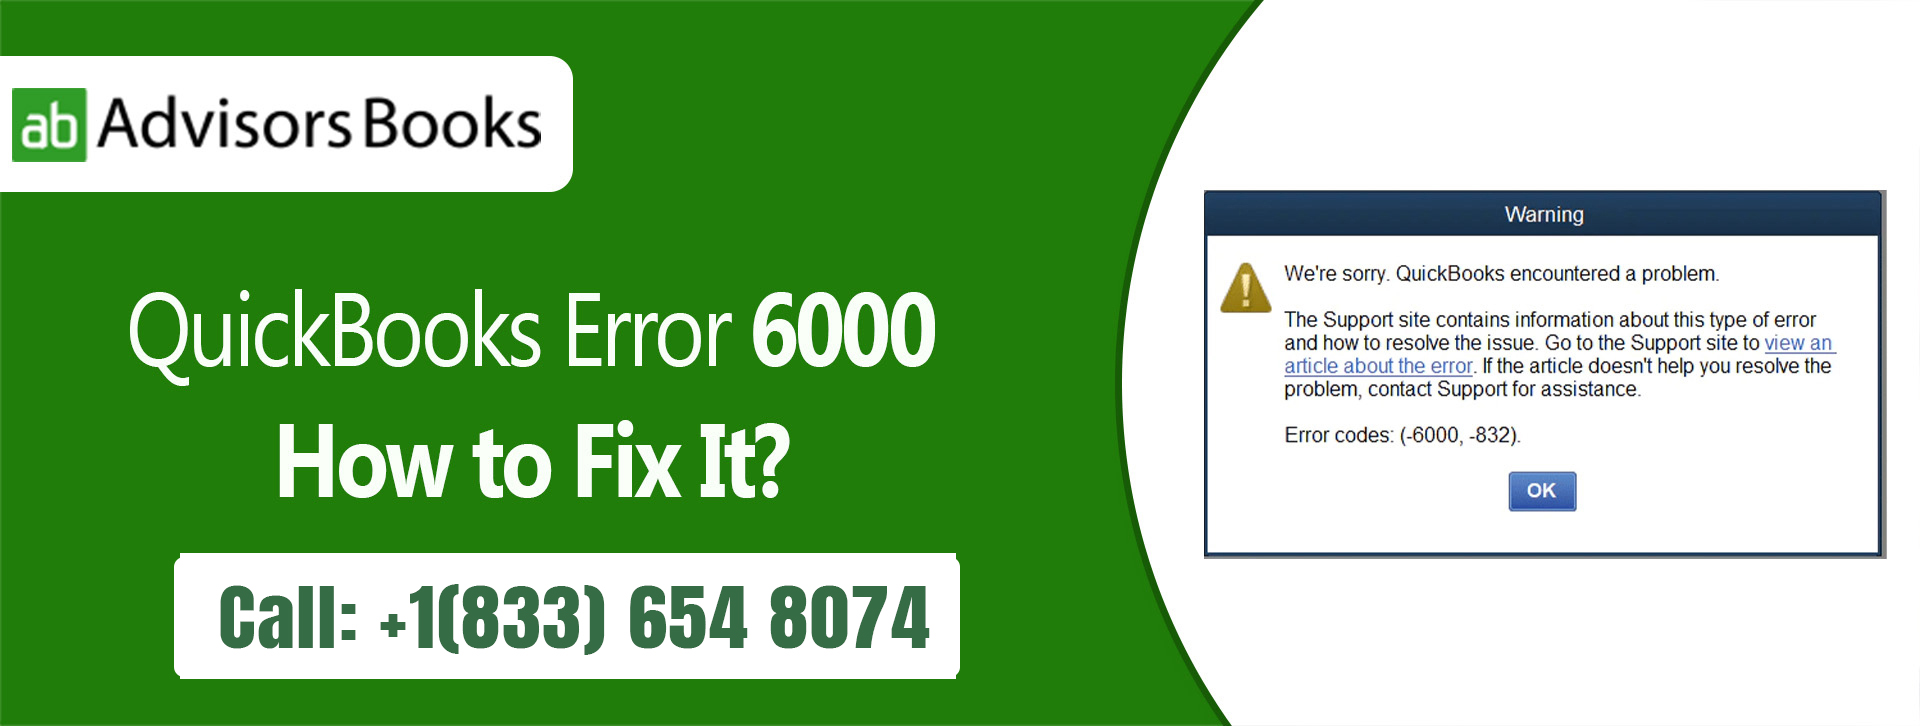 QuickBooks Error 6123: How to Fix It? - AdvisorsBooks